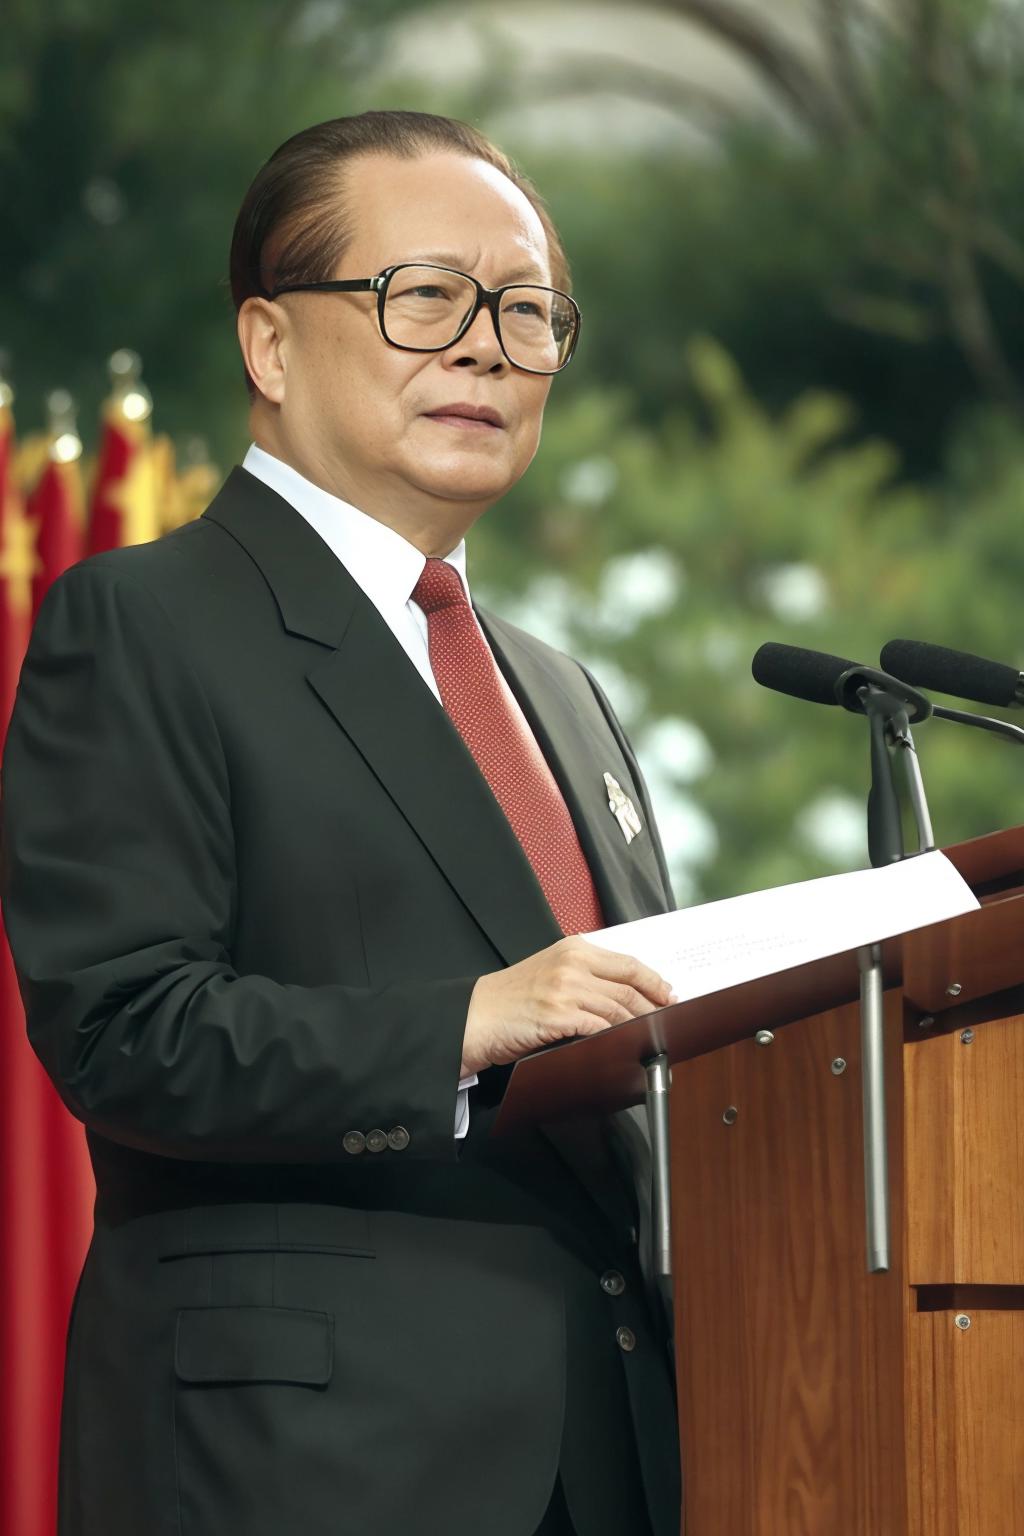 Jiang Zemin 长者 image by COBear